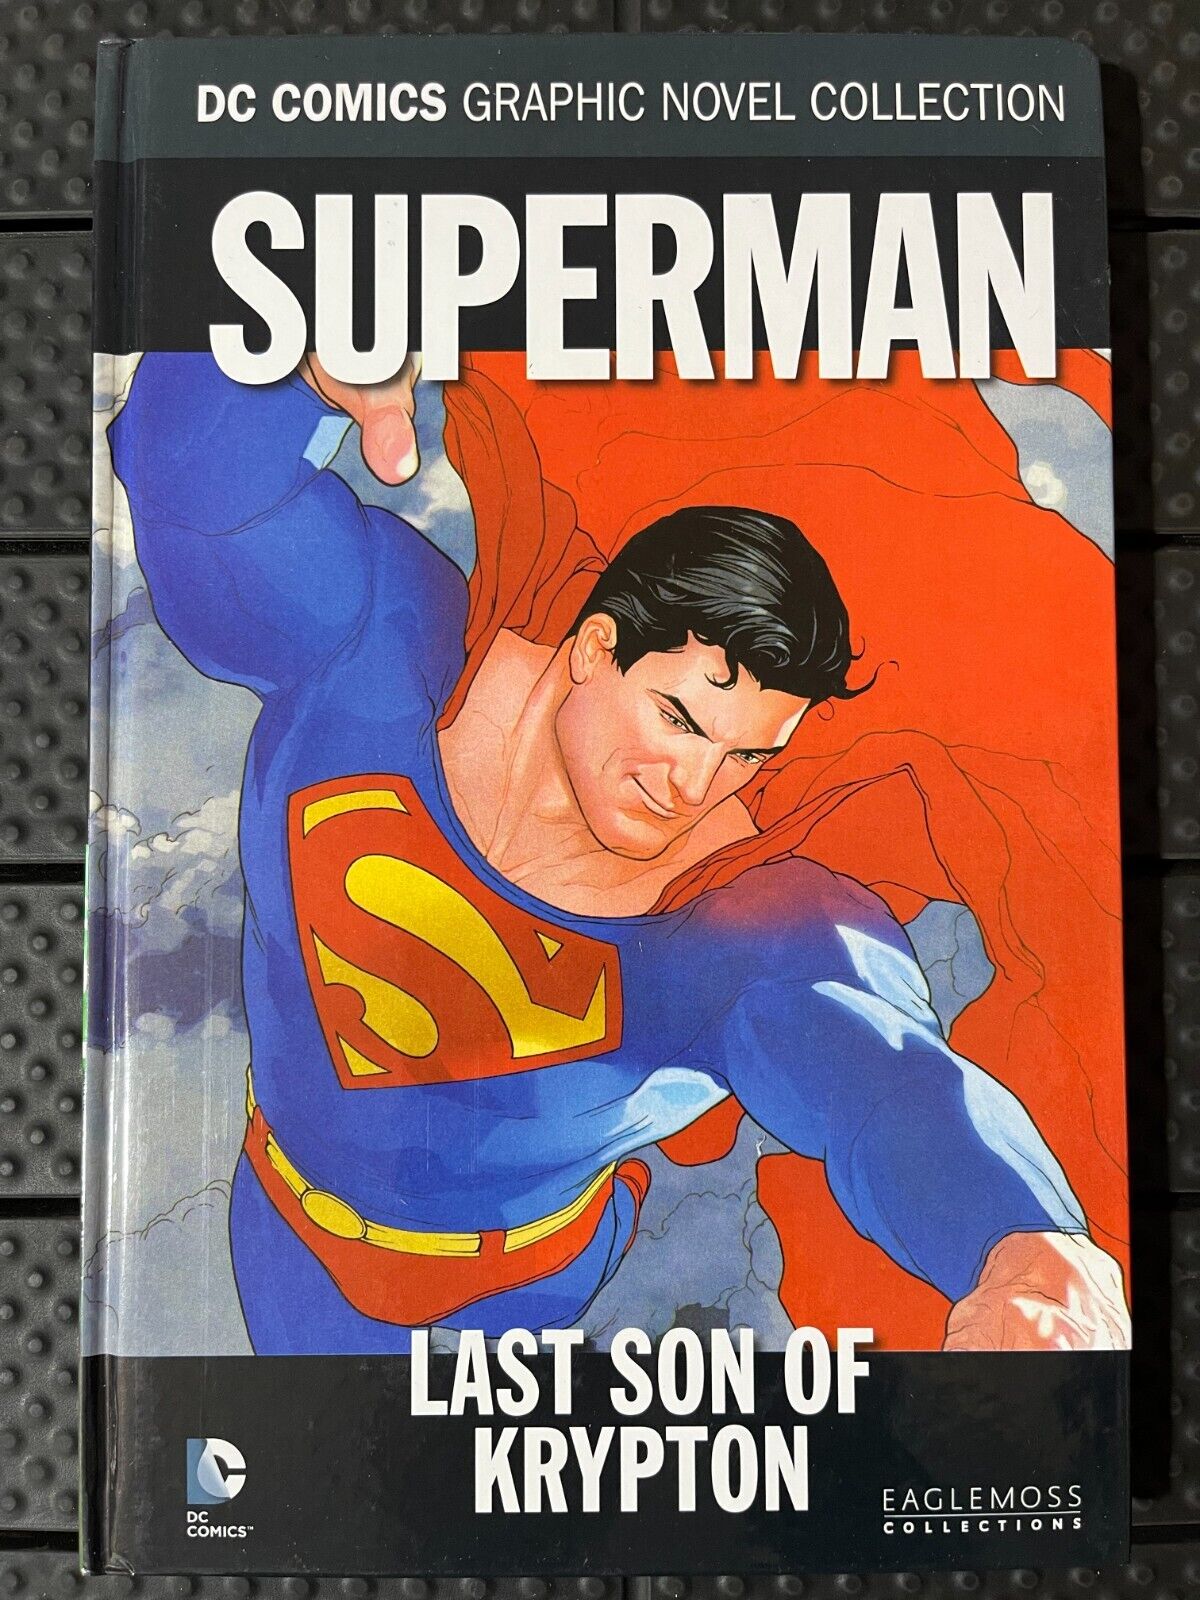 Hardcover DC Comic Graphic Novel Collection Eaglemoss